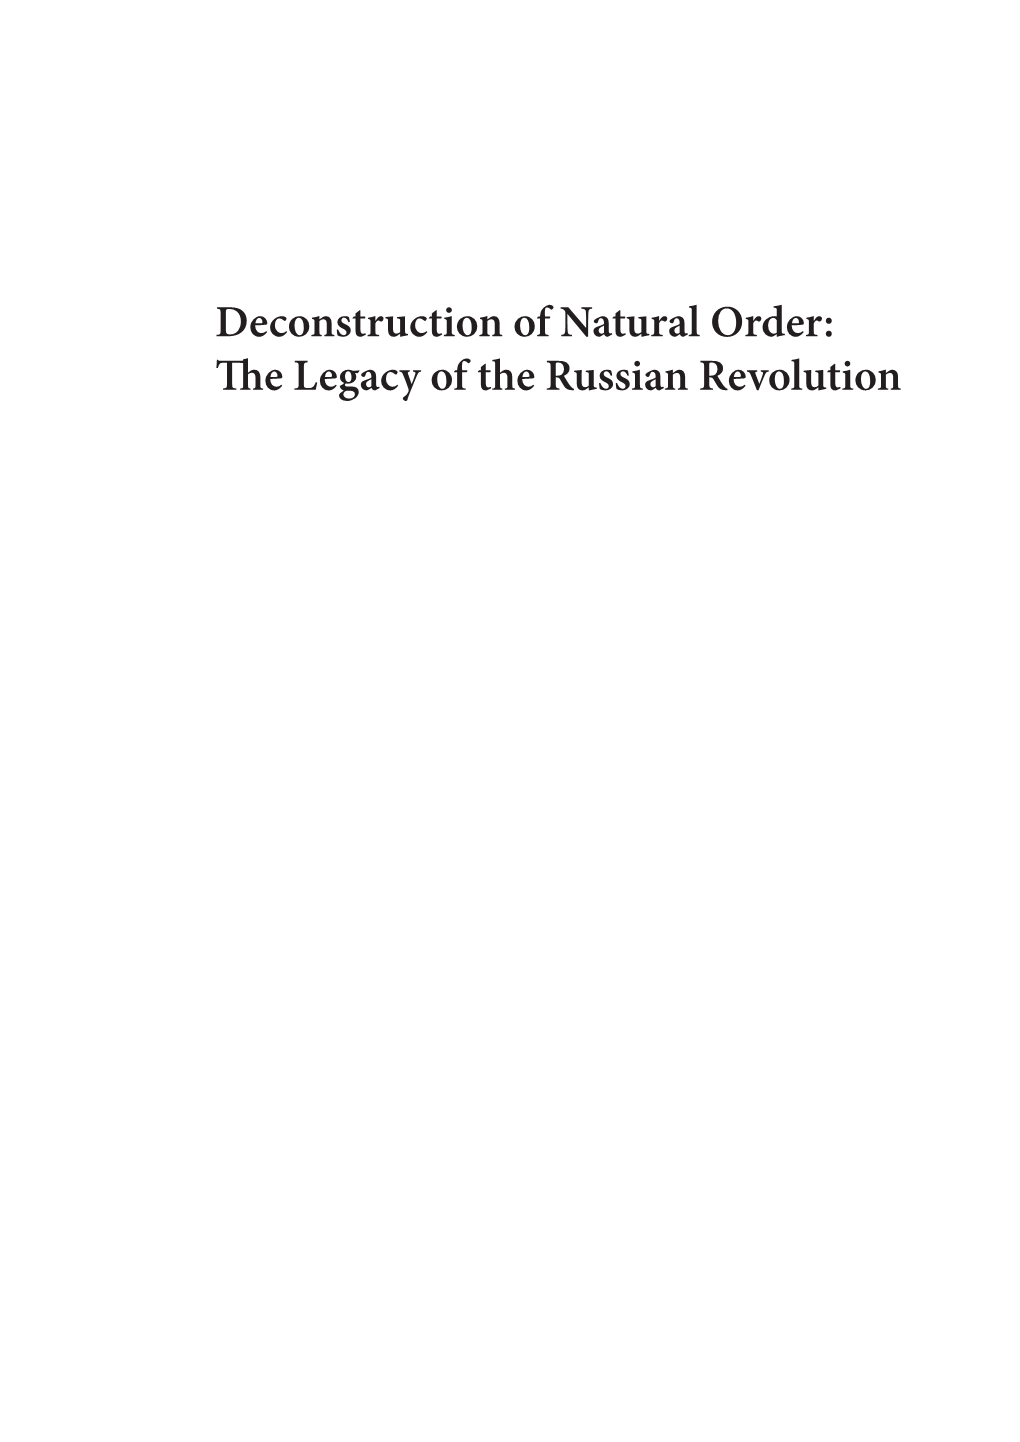 Deconstruction of Natural Order: the Legacy of the Russian Revolution Editors: Joachim Diec, Anna Jach, Michał Kuryłowicz Vol